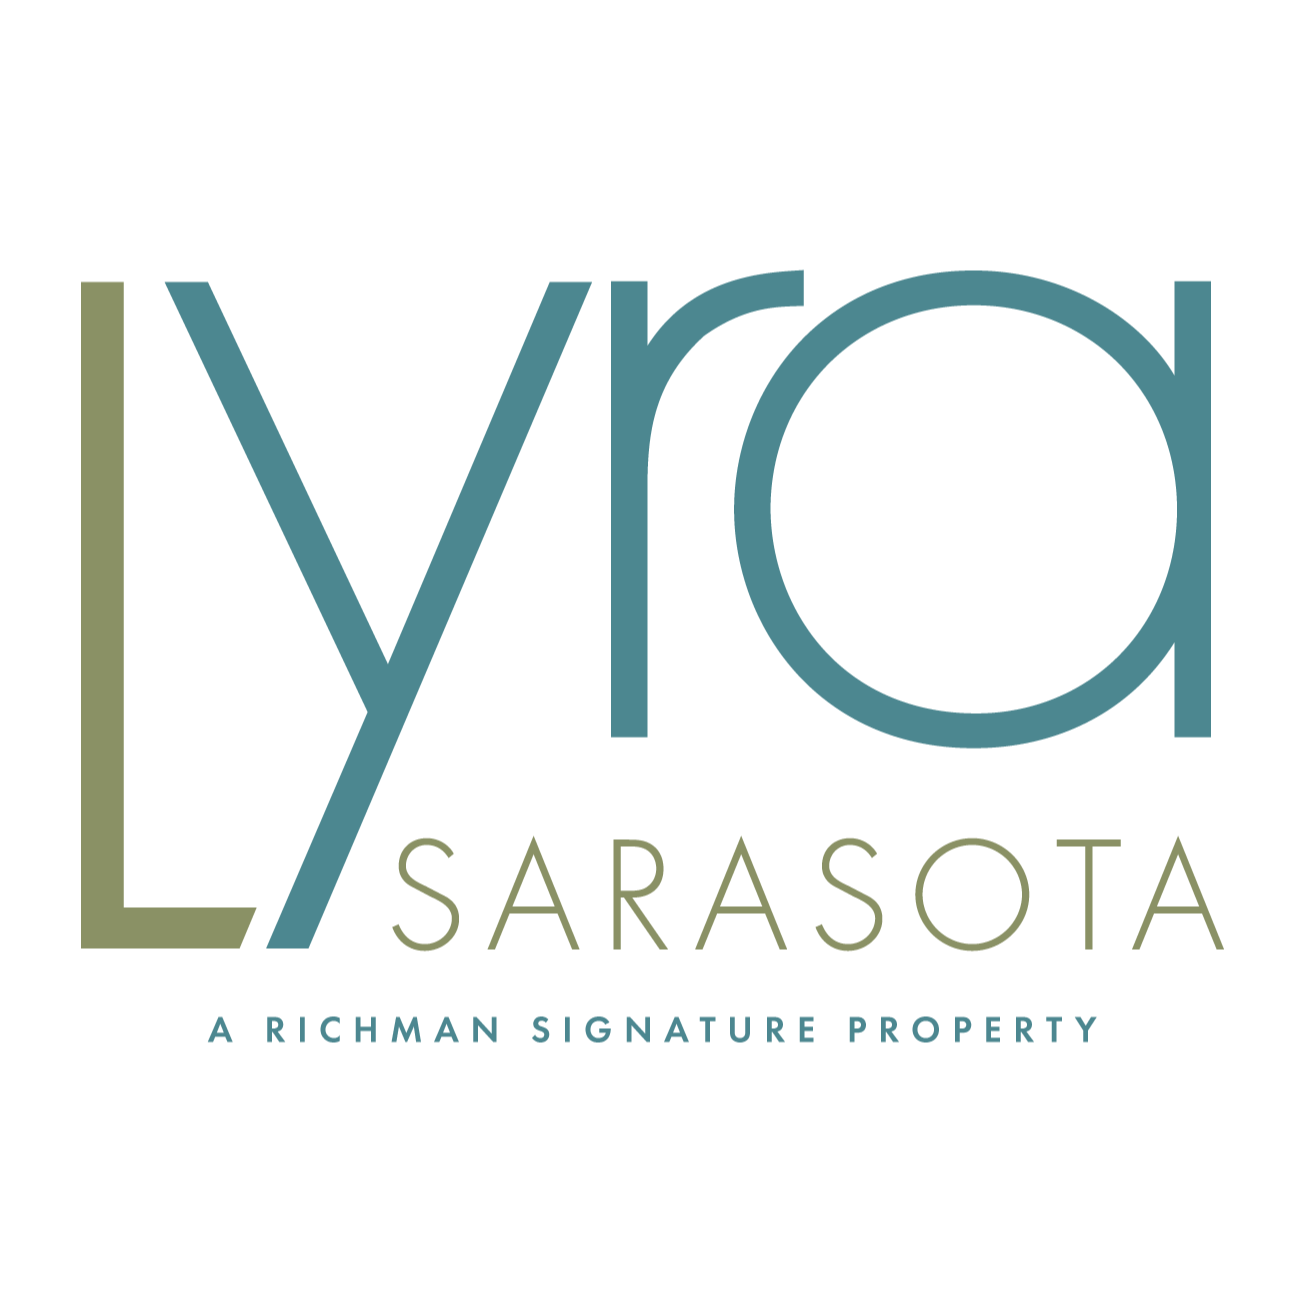 Lyra Apartments